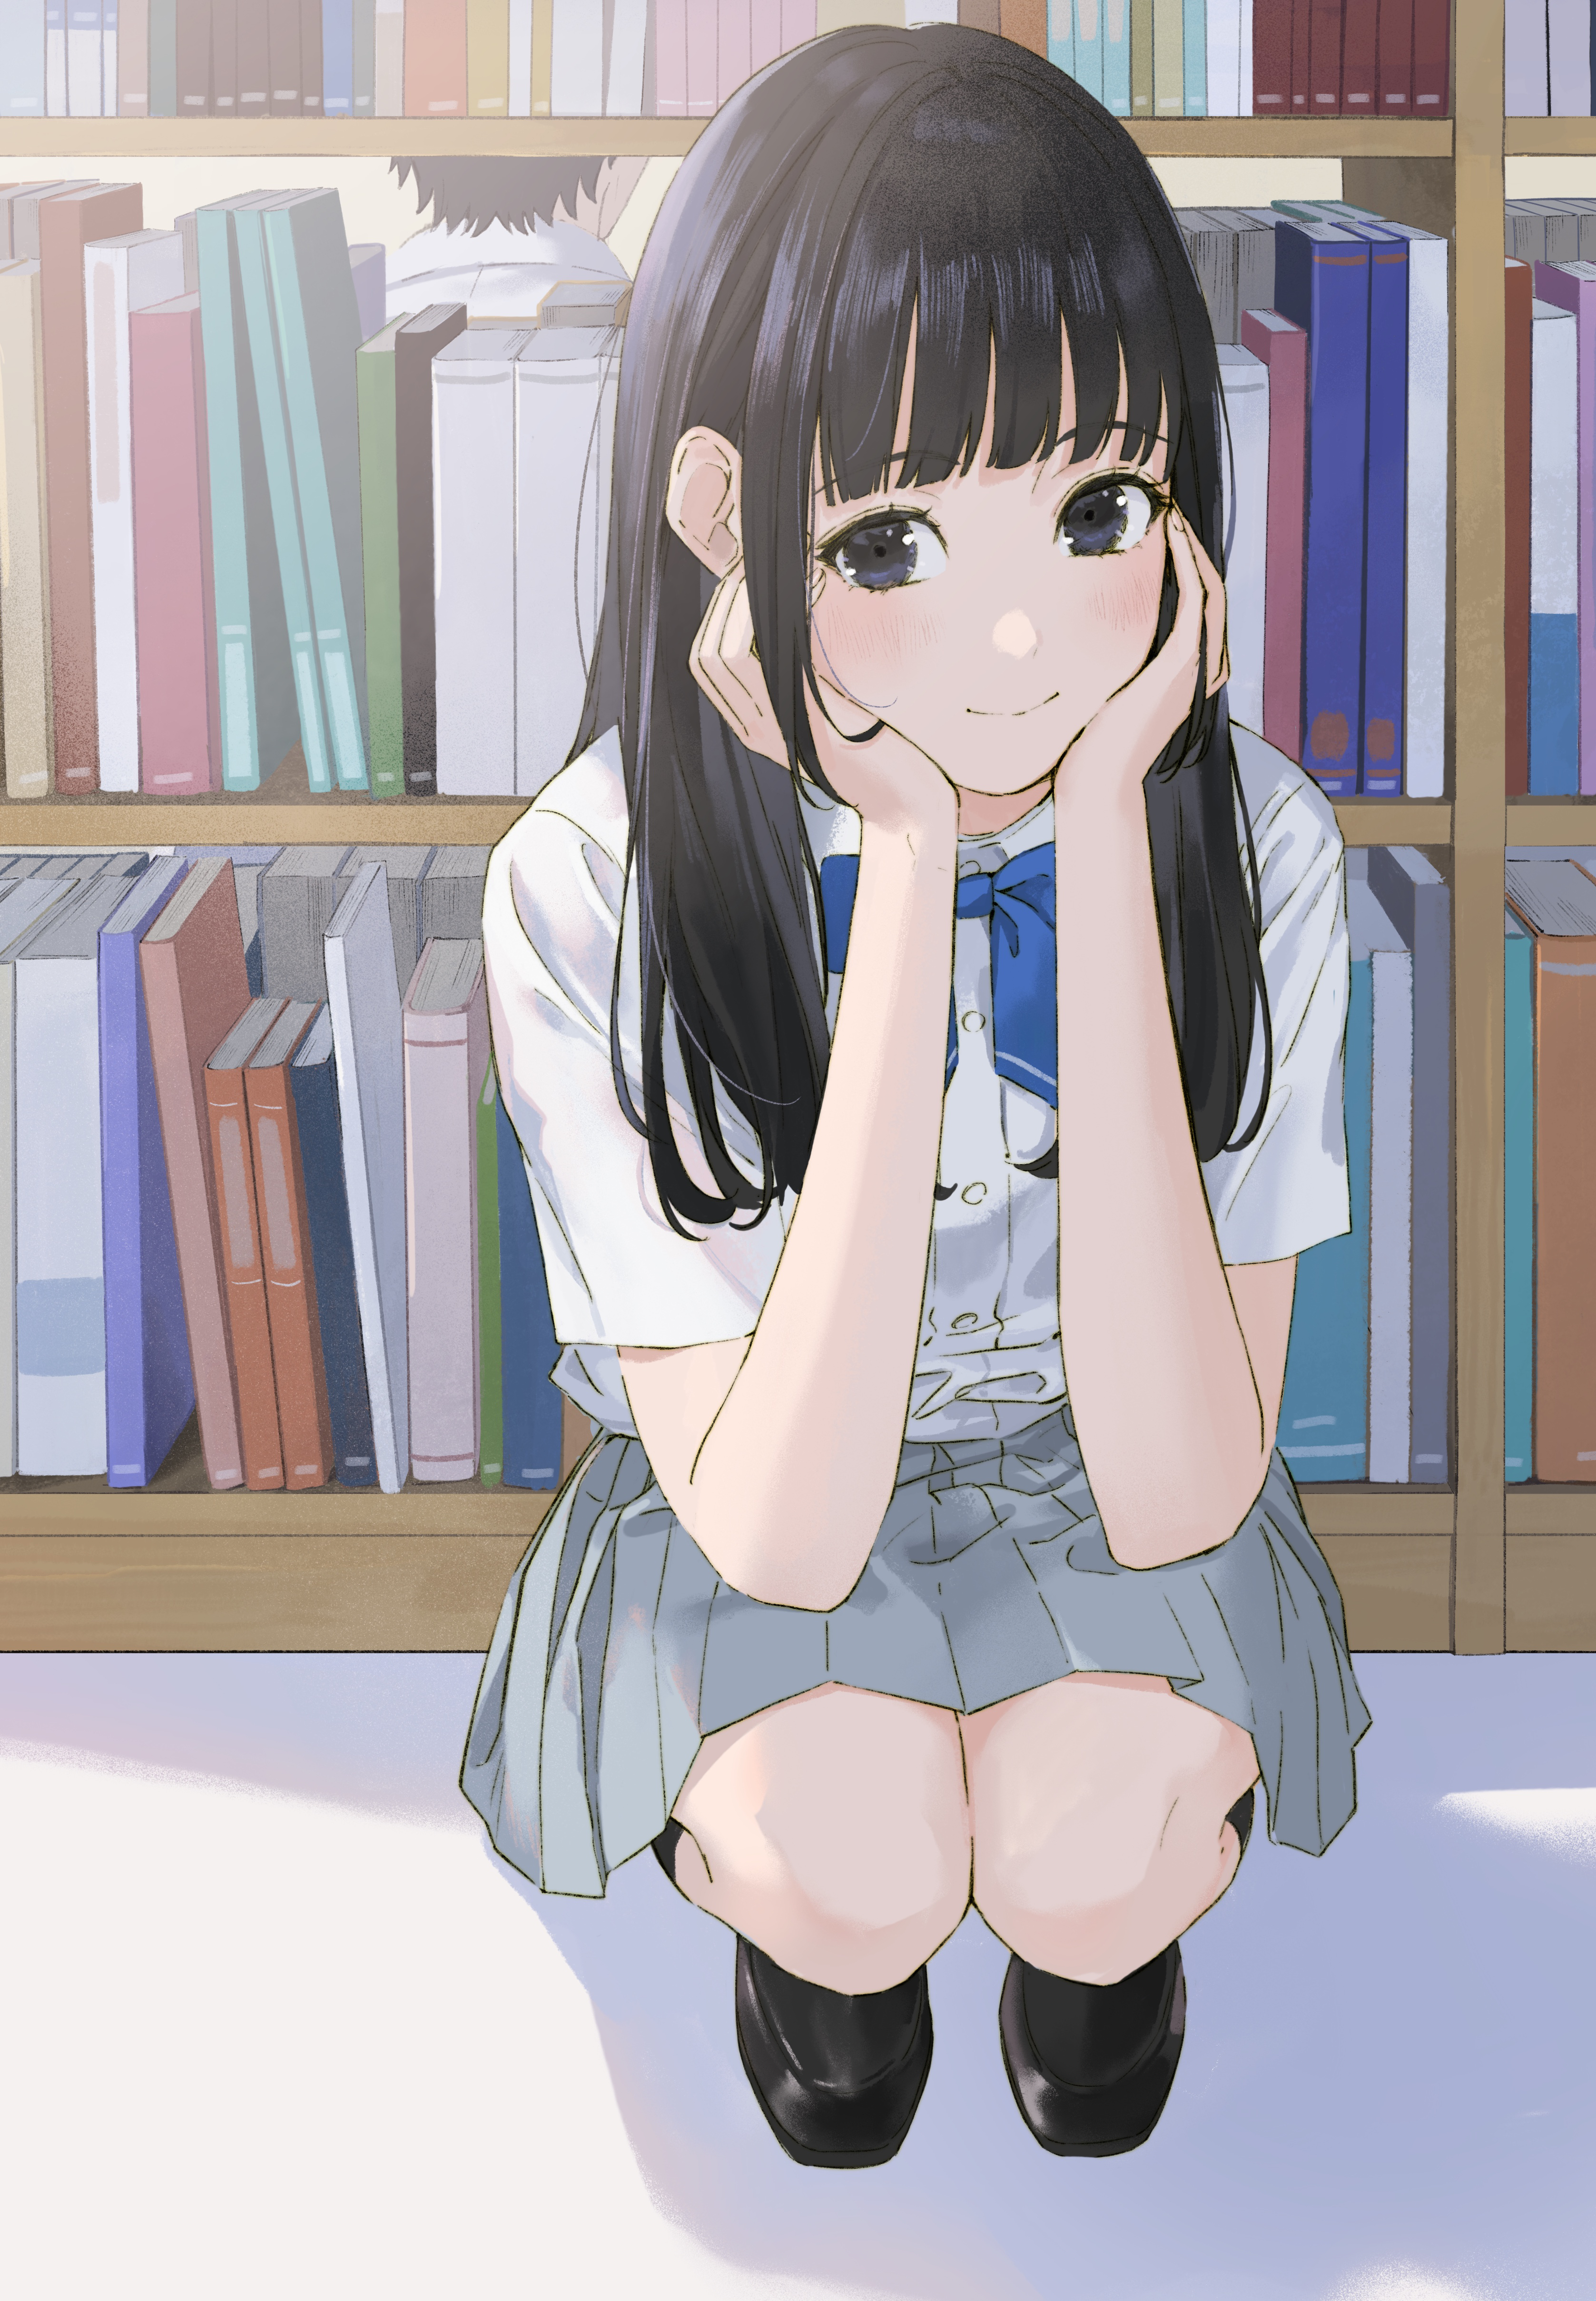 Anime 3354x4835 anime anime girls digital art artwork 2D portrait display Sako school uniform squatting smiling dark hair dark eyes library books